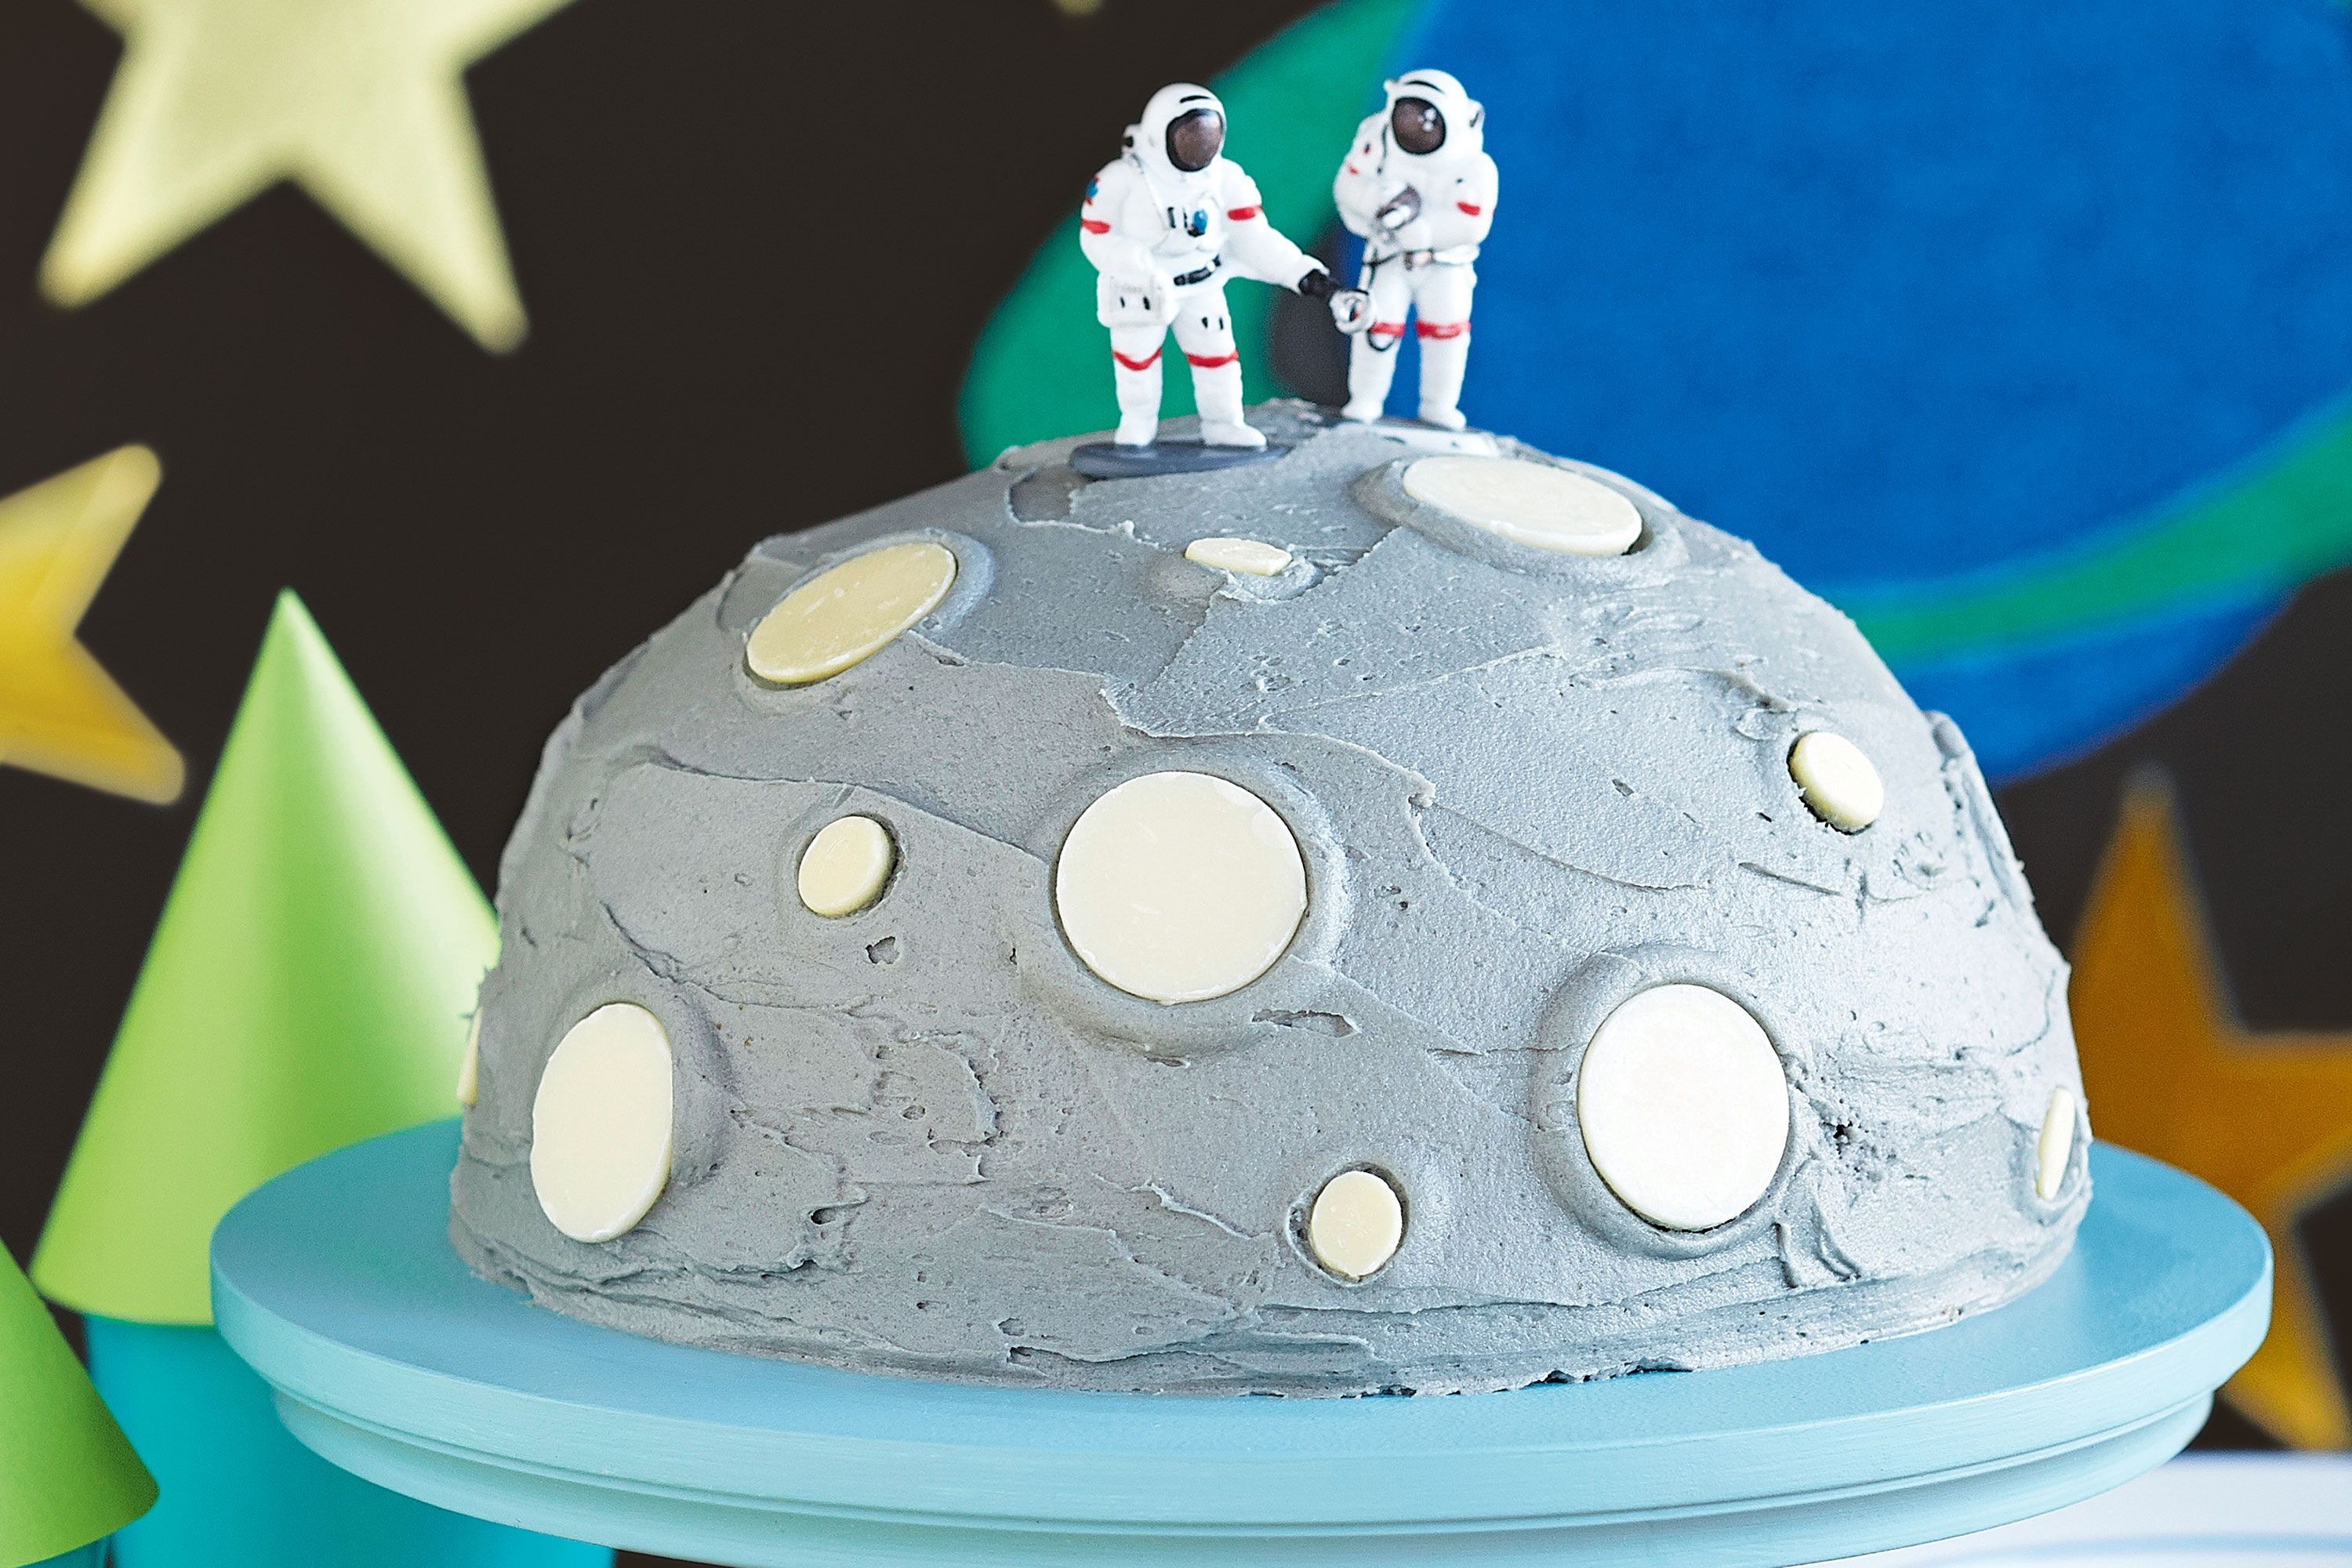 Man-on-the-moon cake